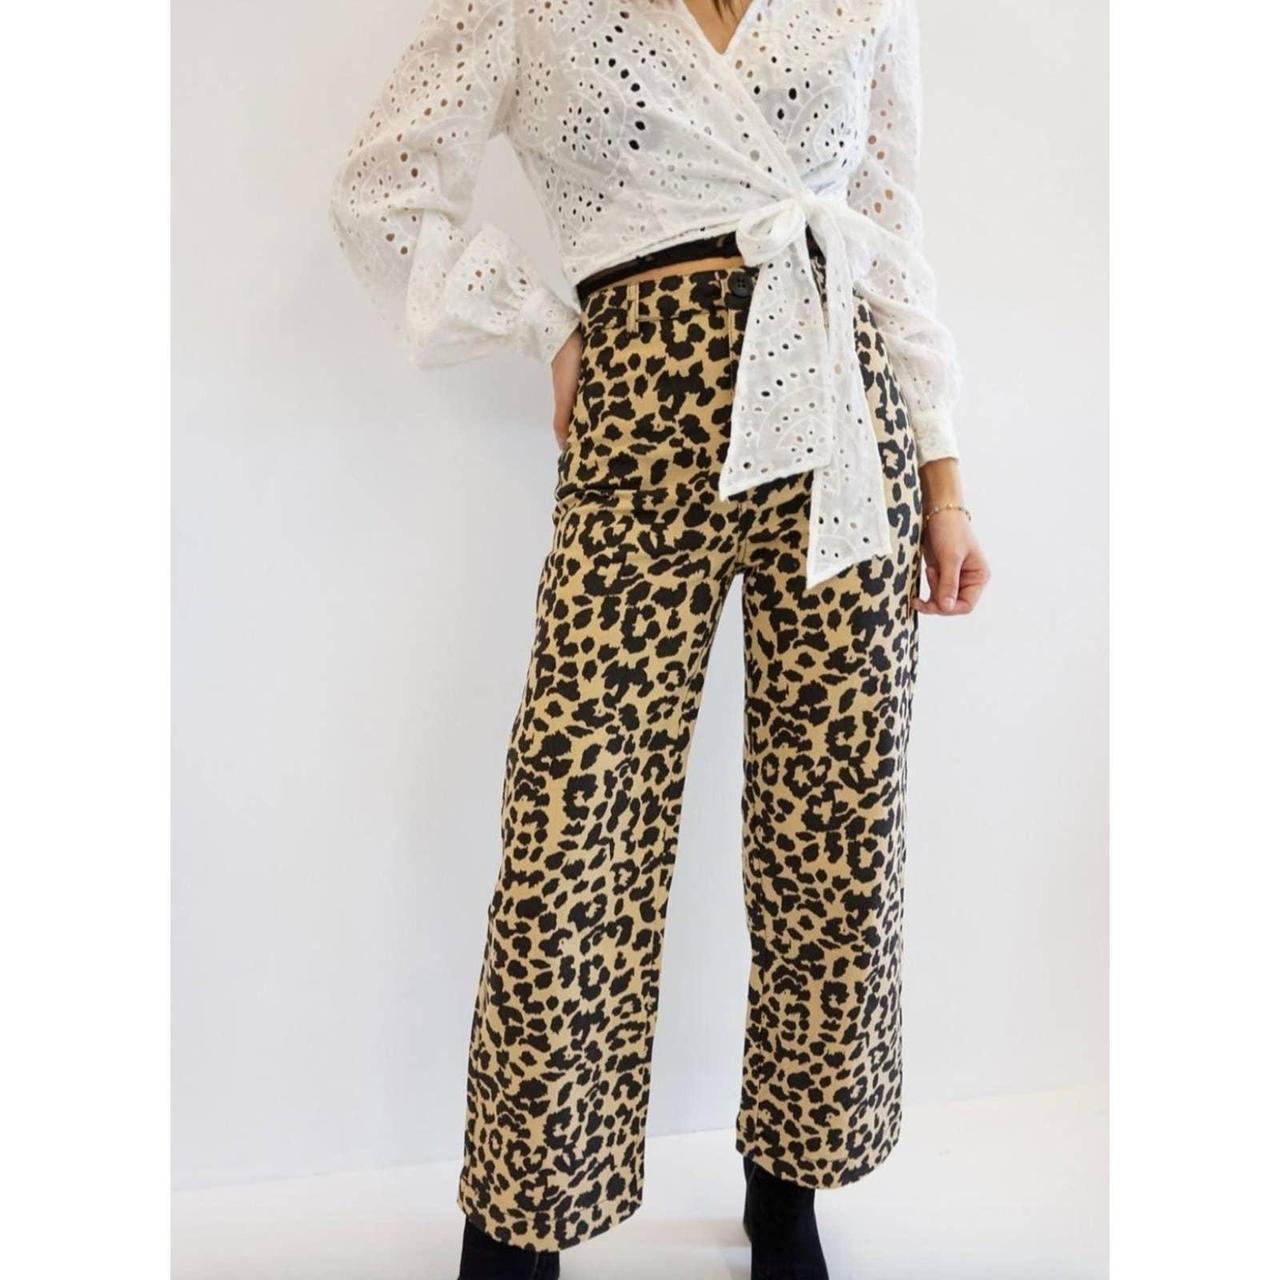 Cotton Candy LA Leopard Cheetah Animal Print Denim... - Depop